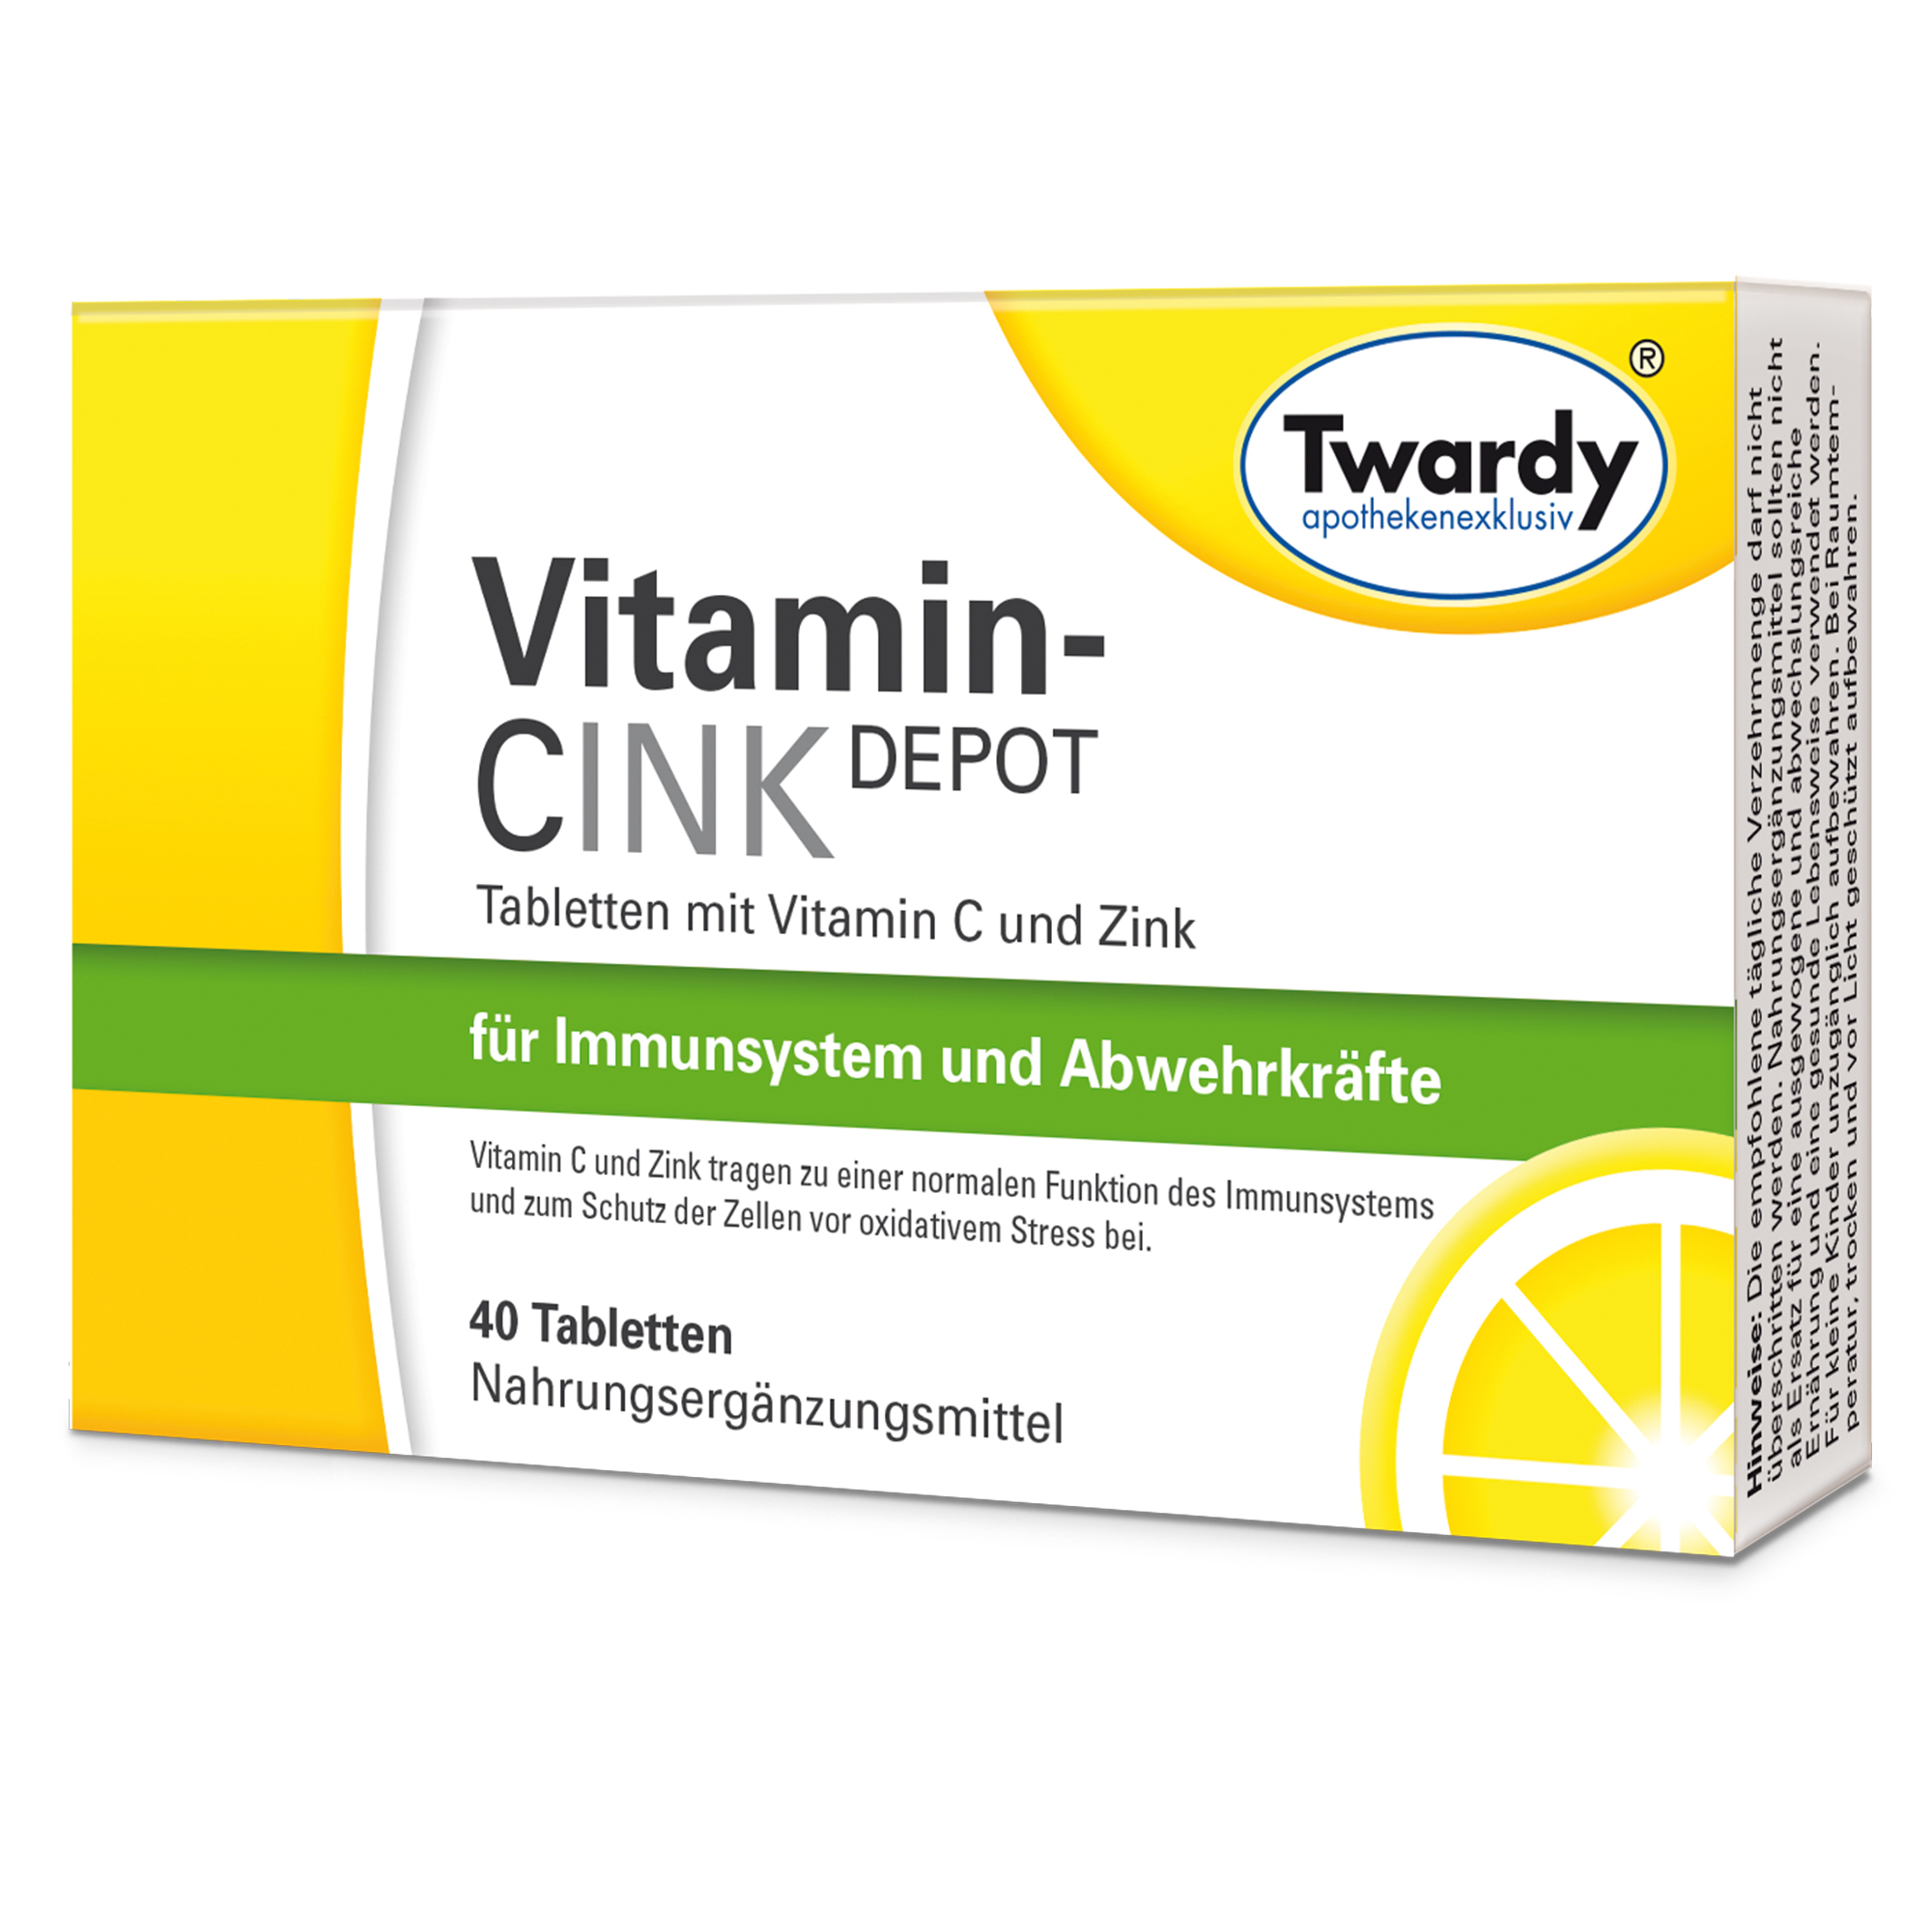 Vitamin-CINK DEPOT Tabletten – PZN 01439761